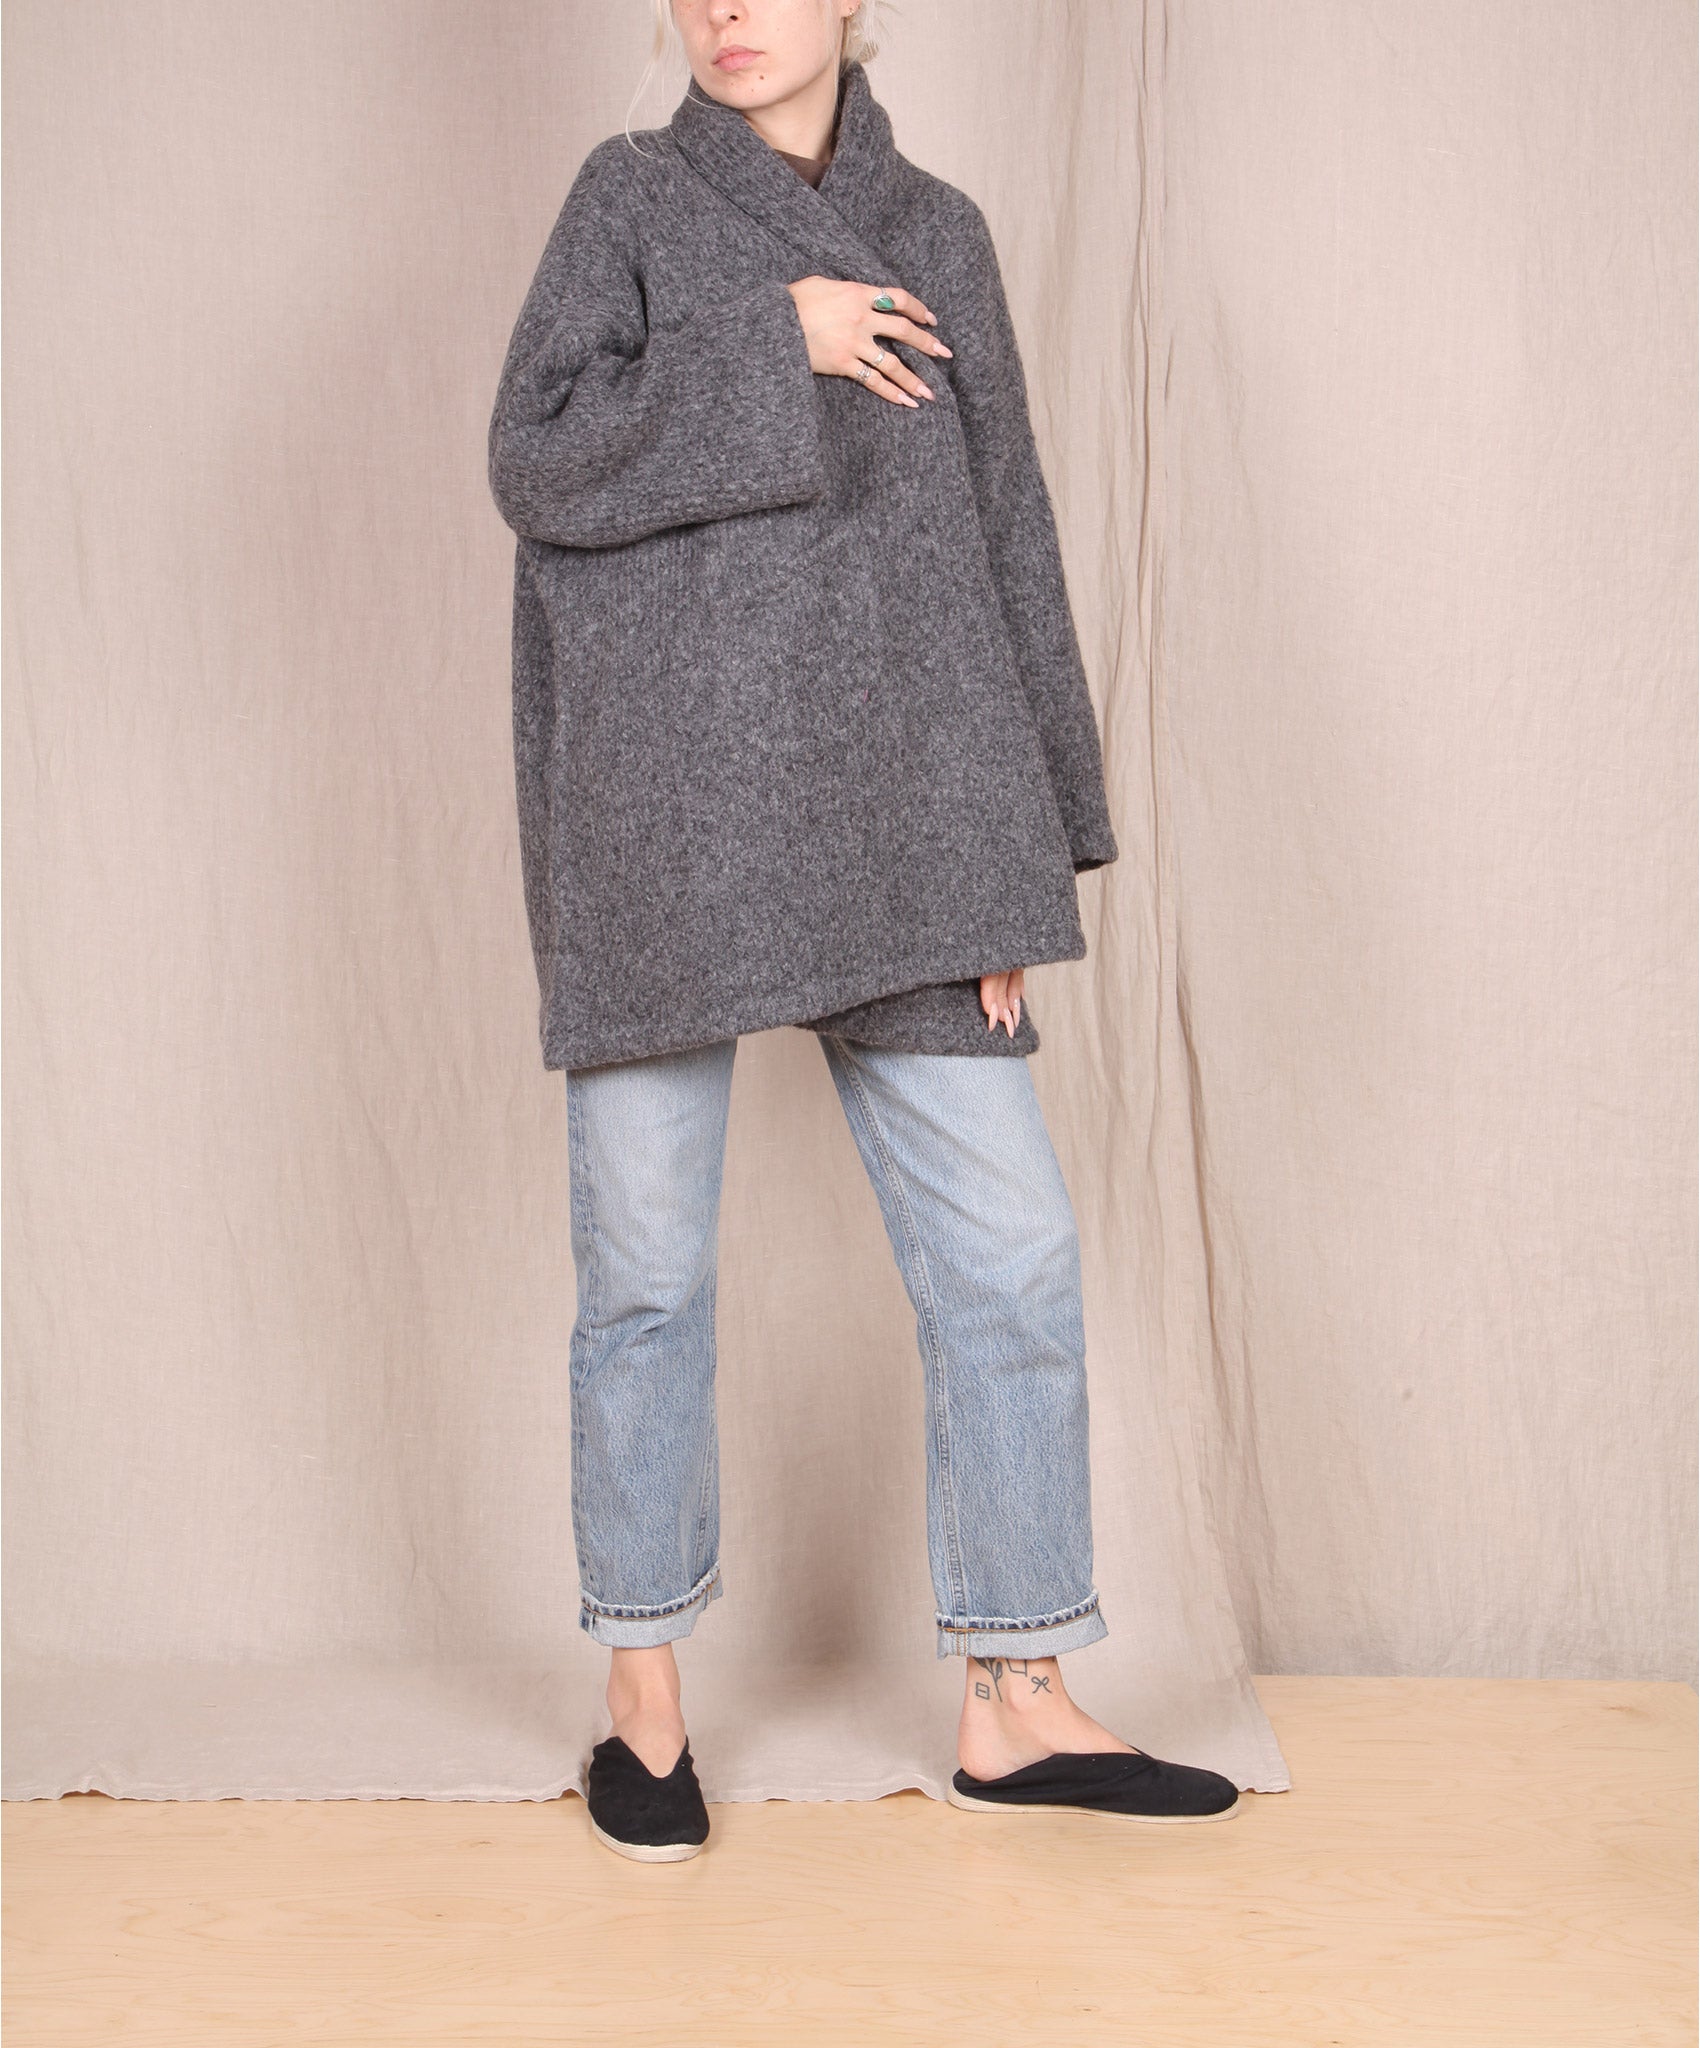 Atelier Delphine-Haori Sweater Coat // CHARCOAL